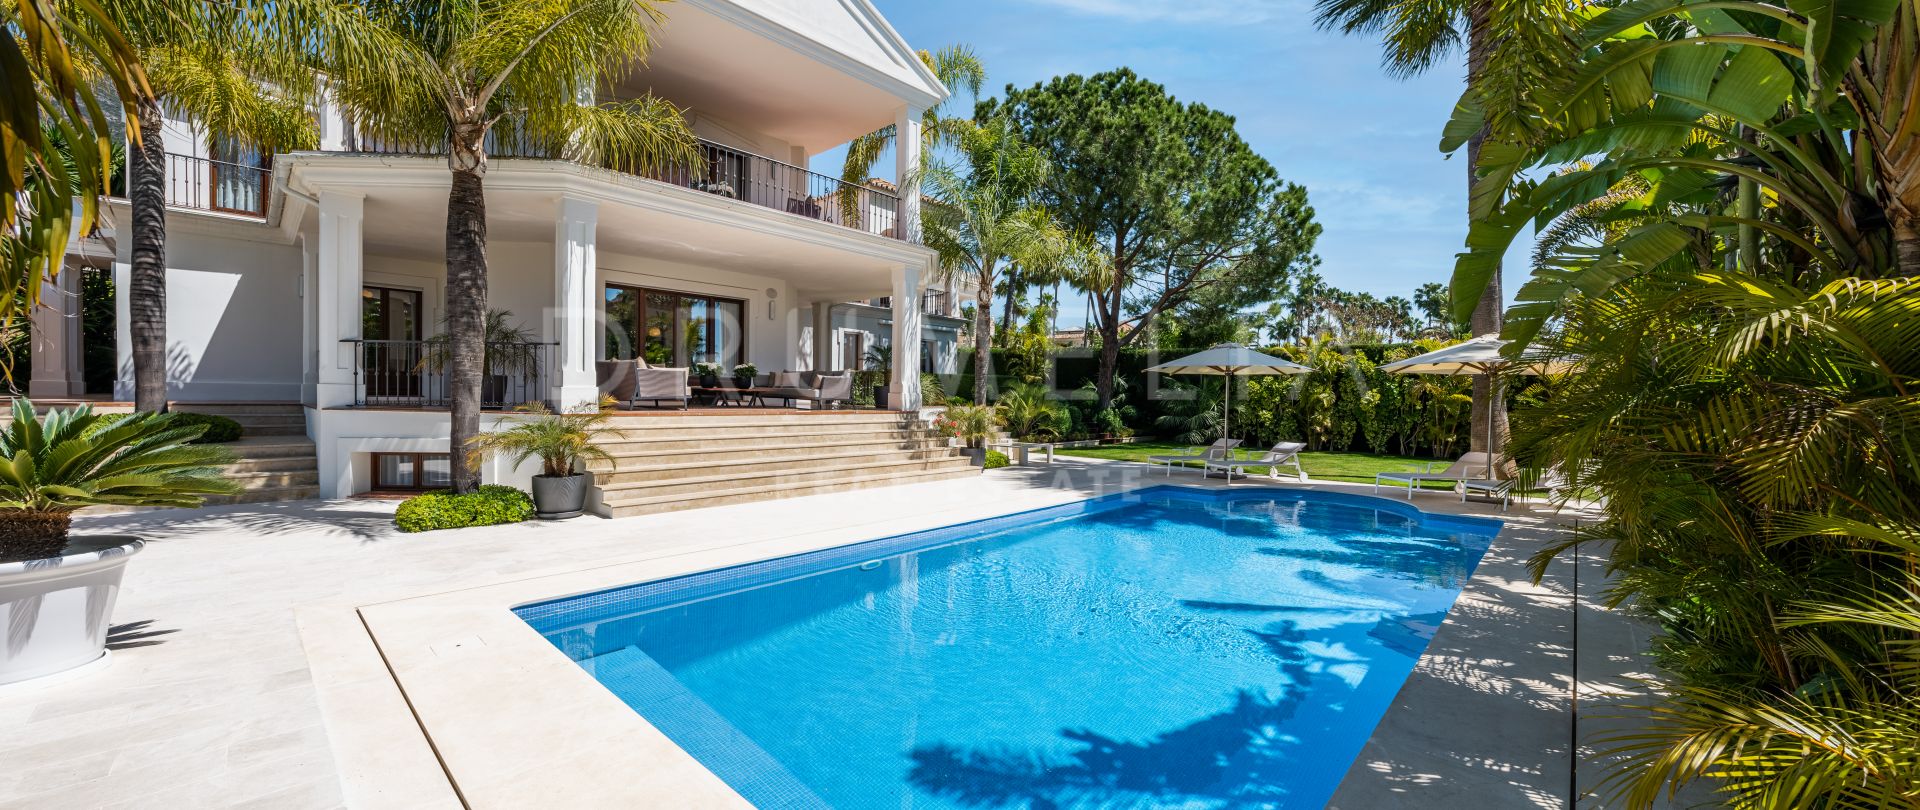 Villa Gloria - Elegant high end Mediterranean-style villa in secure urbanisation of Sierra Blanca, Marbella